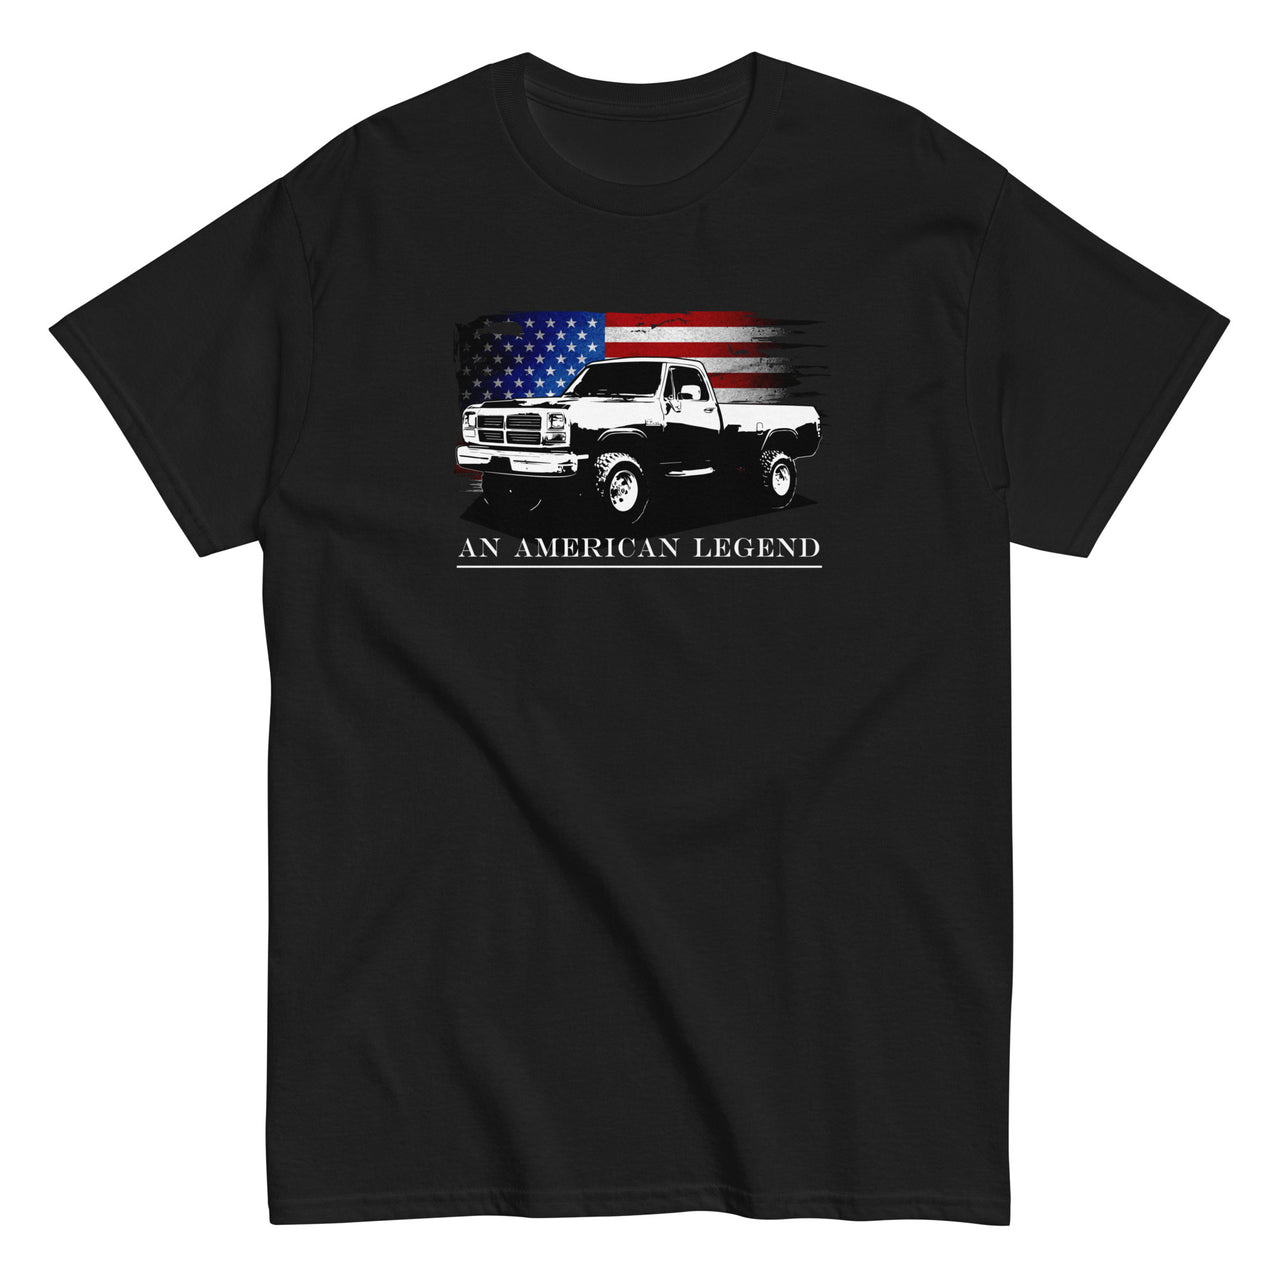 First Gen Dodge Ram American Legend T-Shirt in black